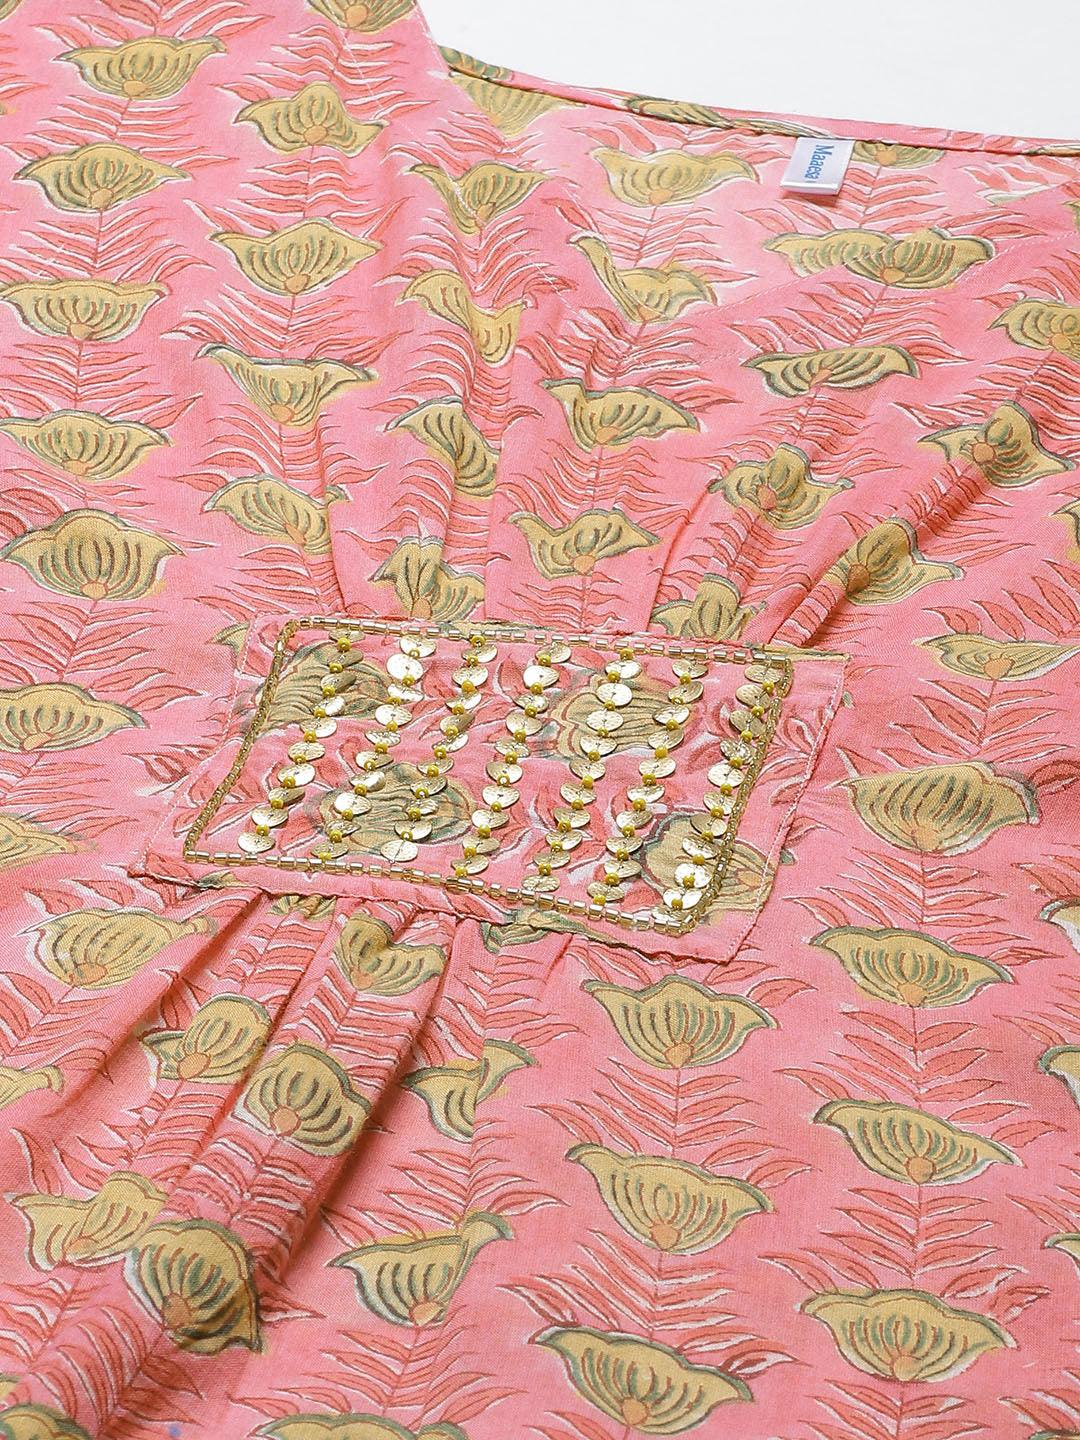 Womens Pink Colored Kaftan Dress Regular Kaftan from Maaesa Creations -MAKF45 - moher.in